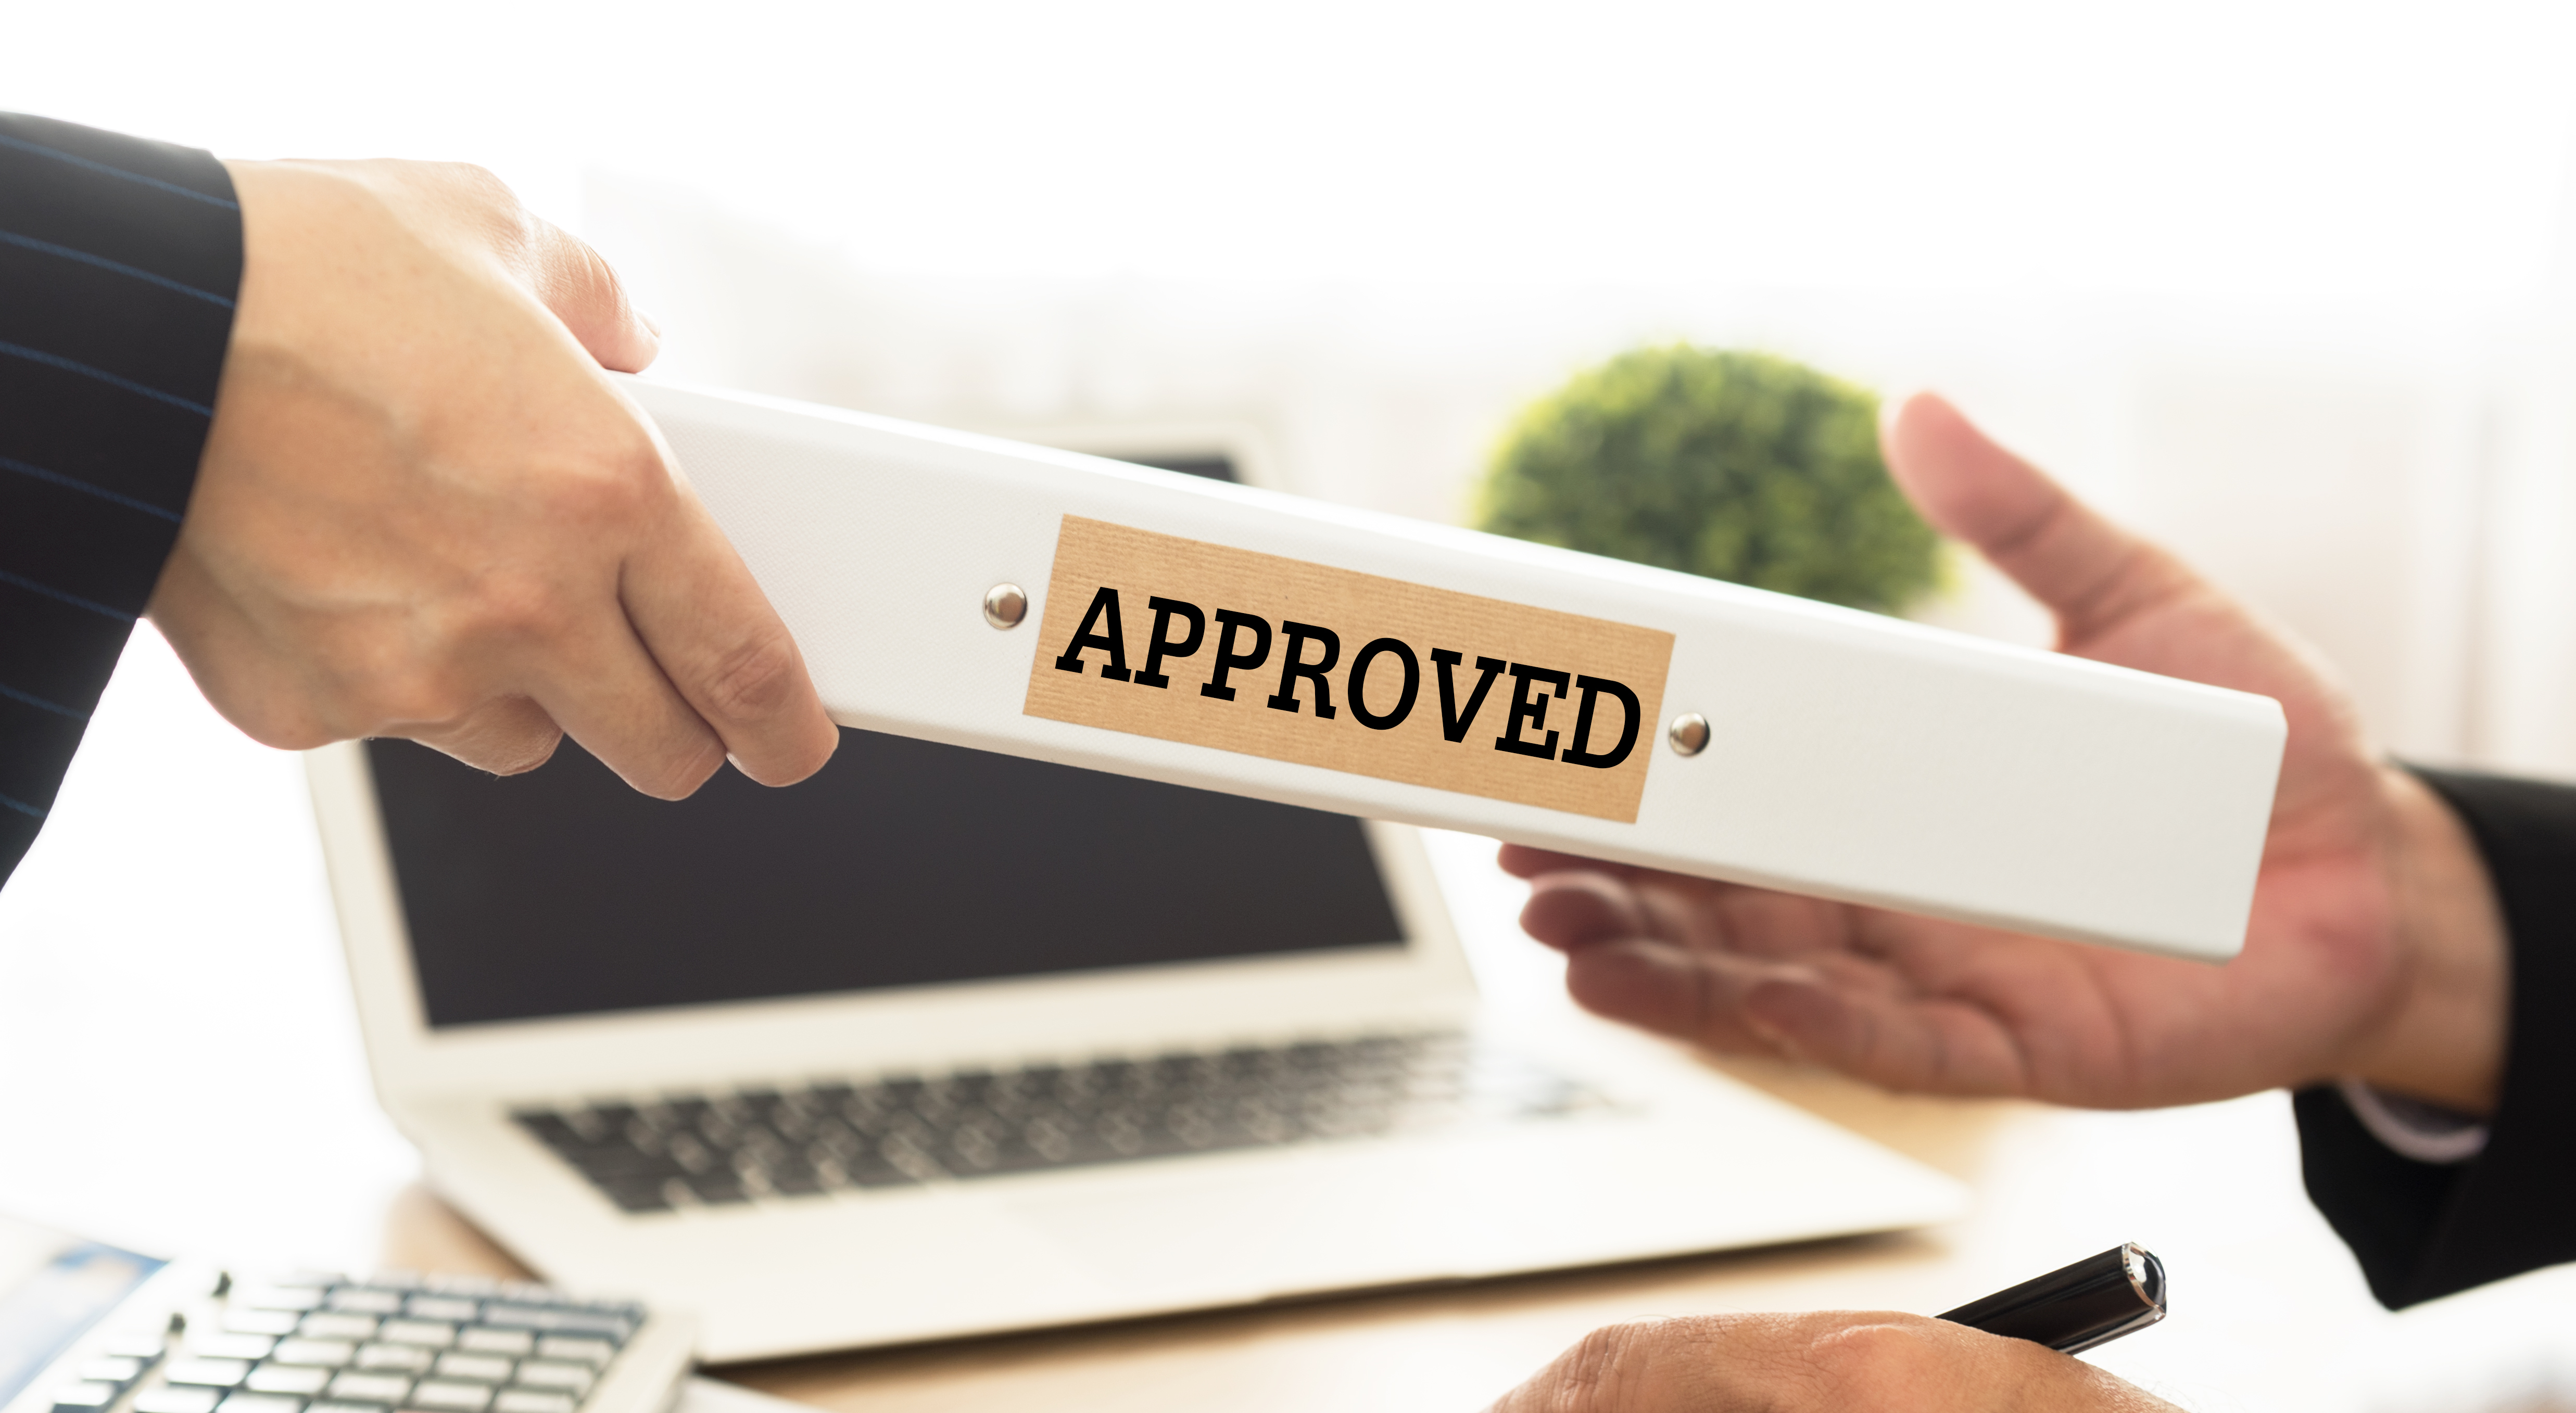 project approval, program approval, business initiative approval